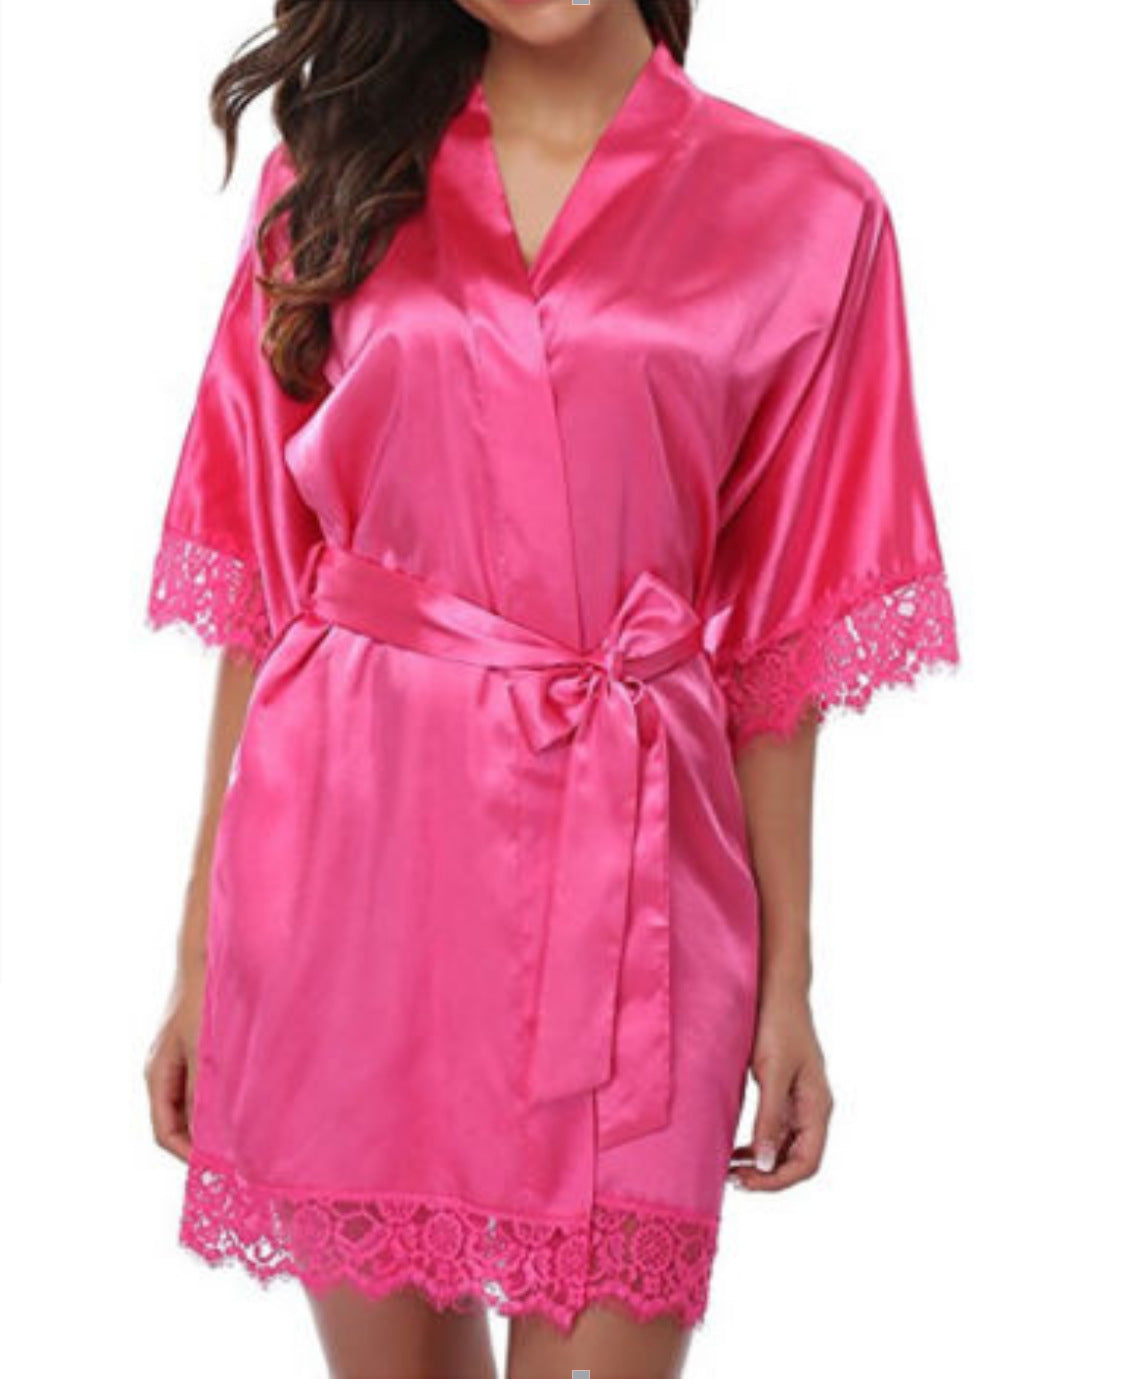 Sexy nightdress with ice silk bathrobe